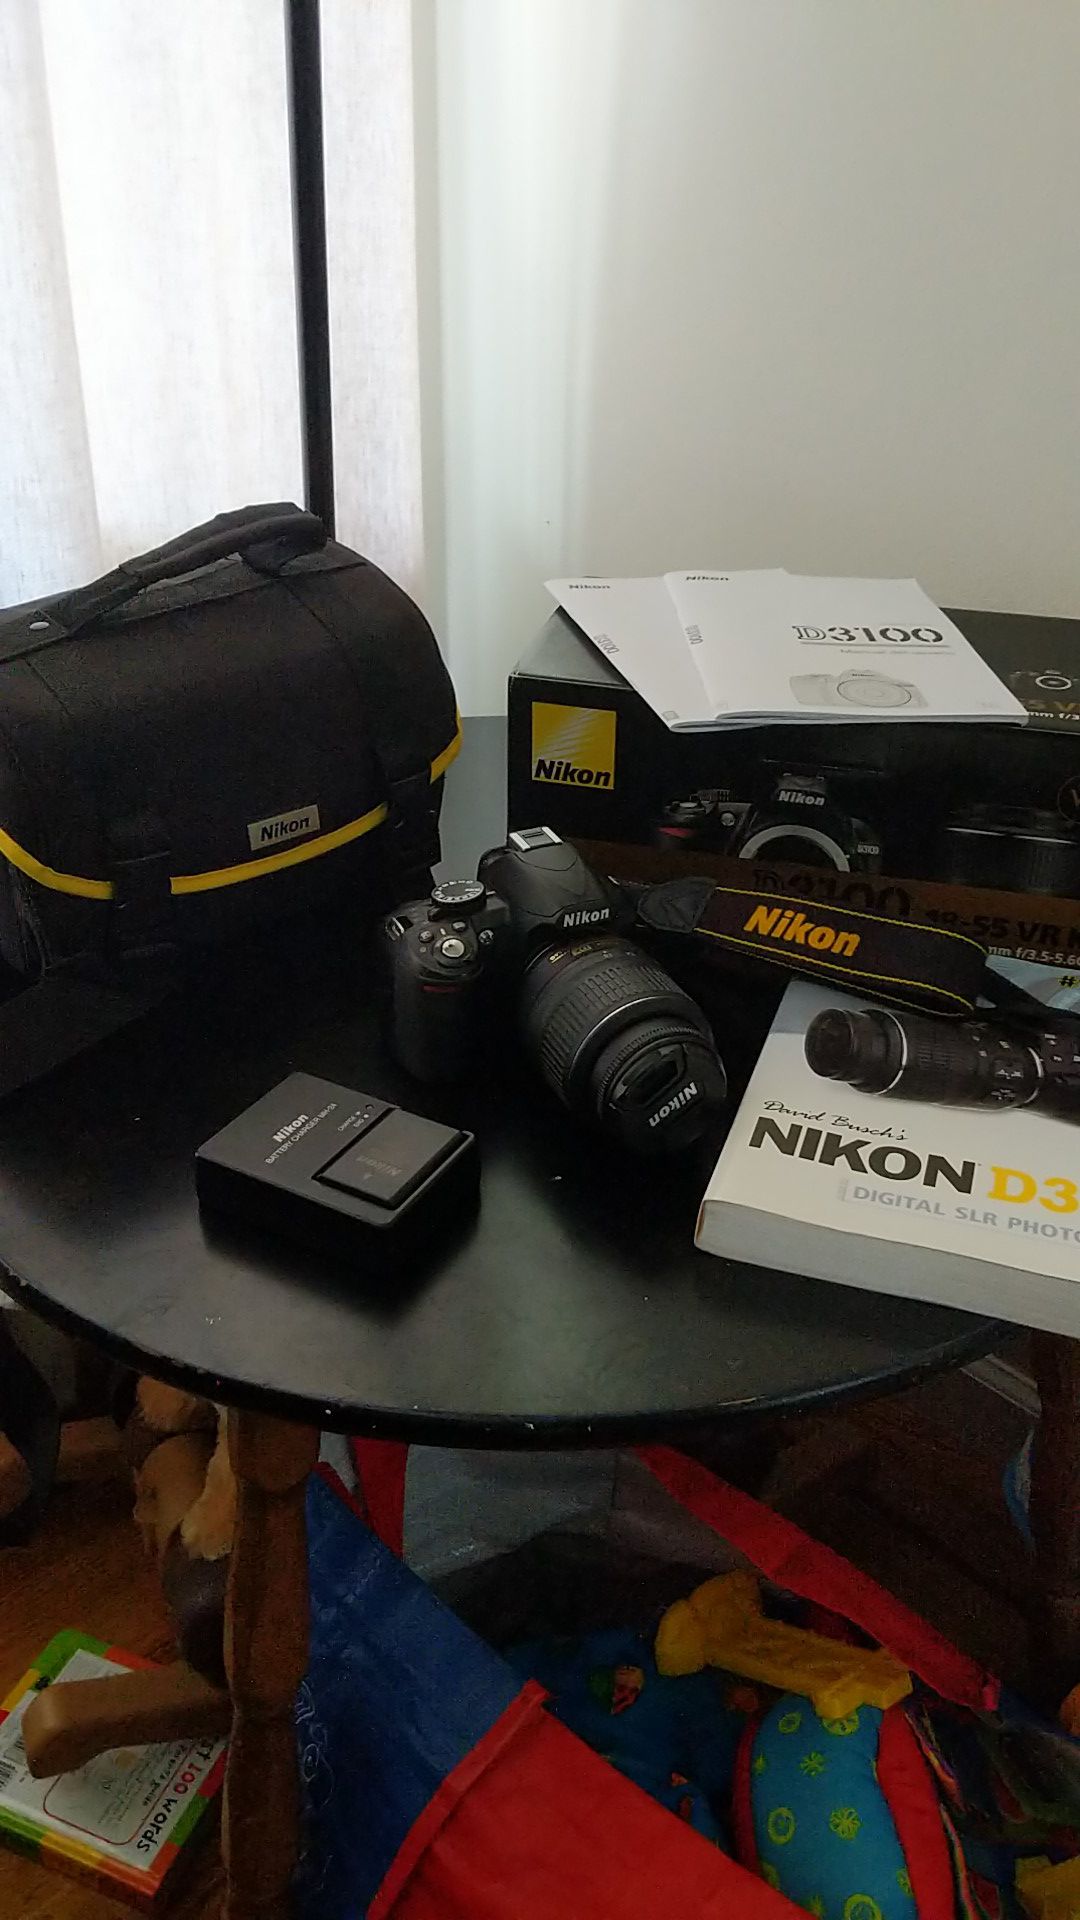 Nikon D3100 Complete Digital DSLR Camera Kit